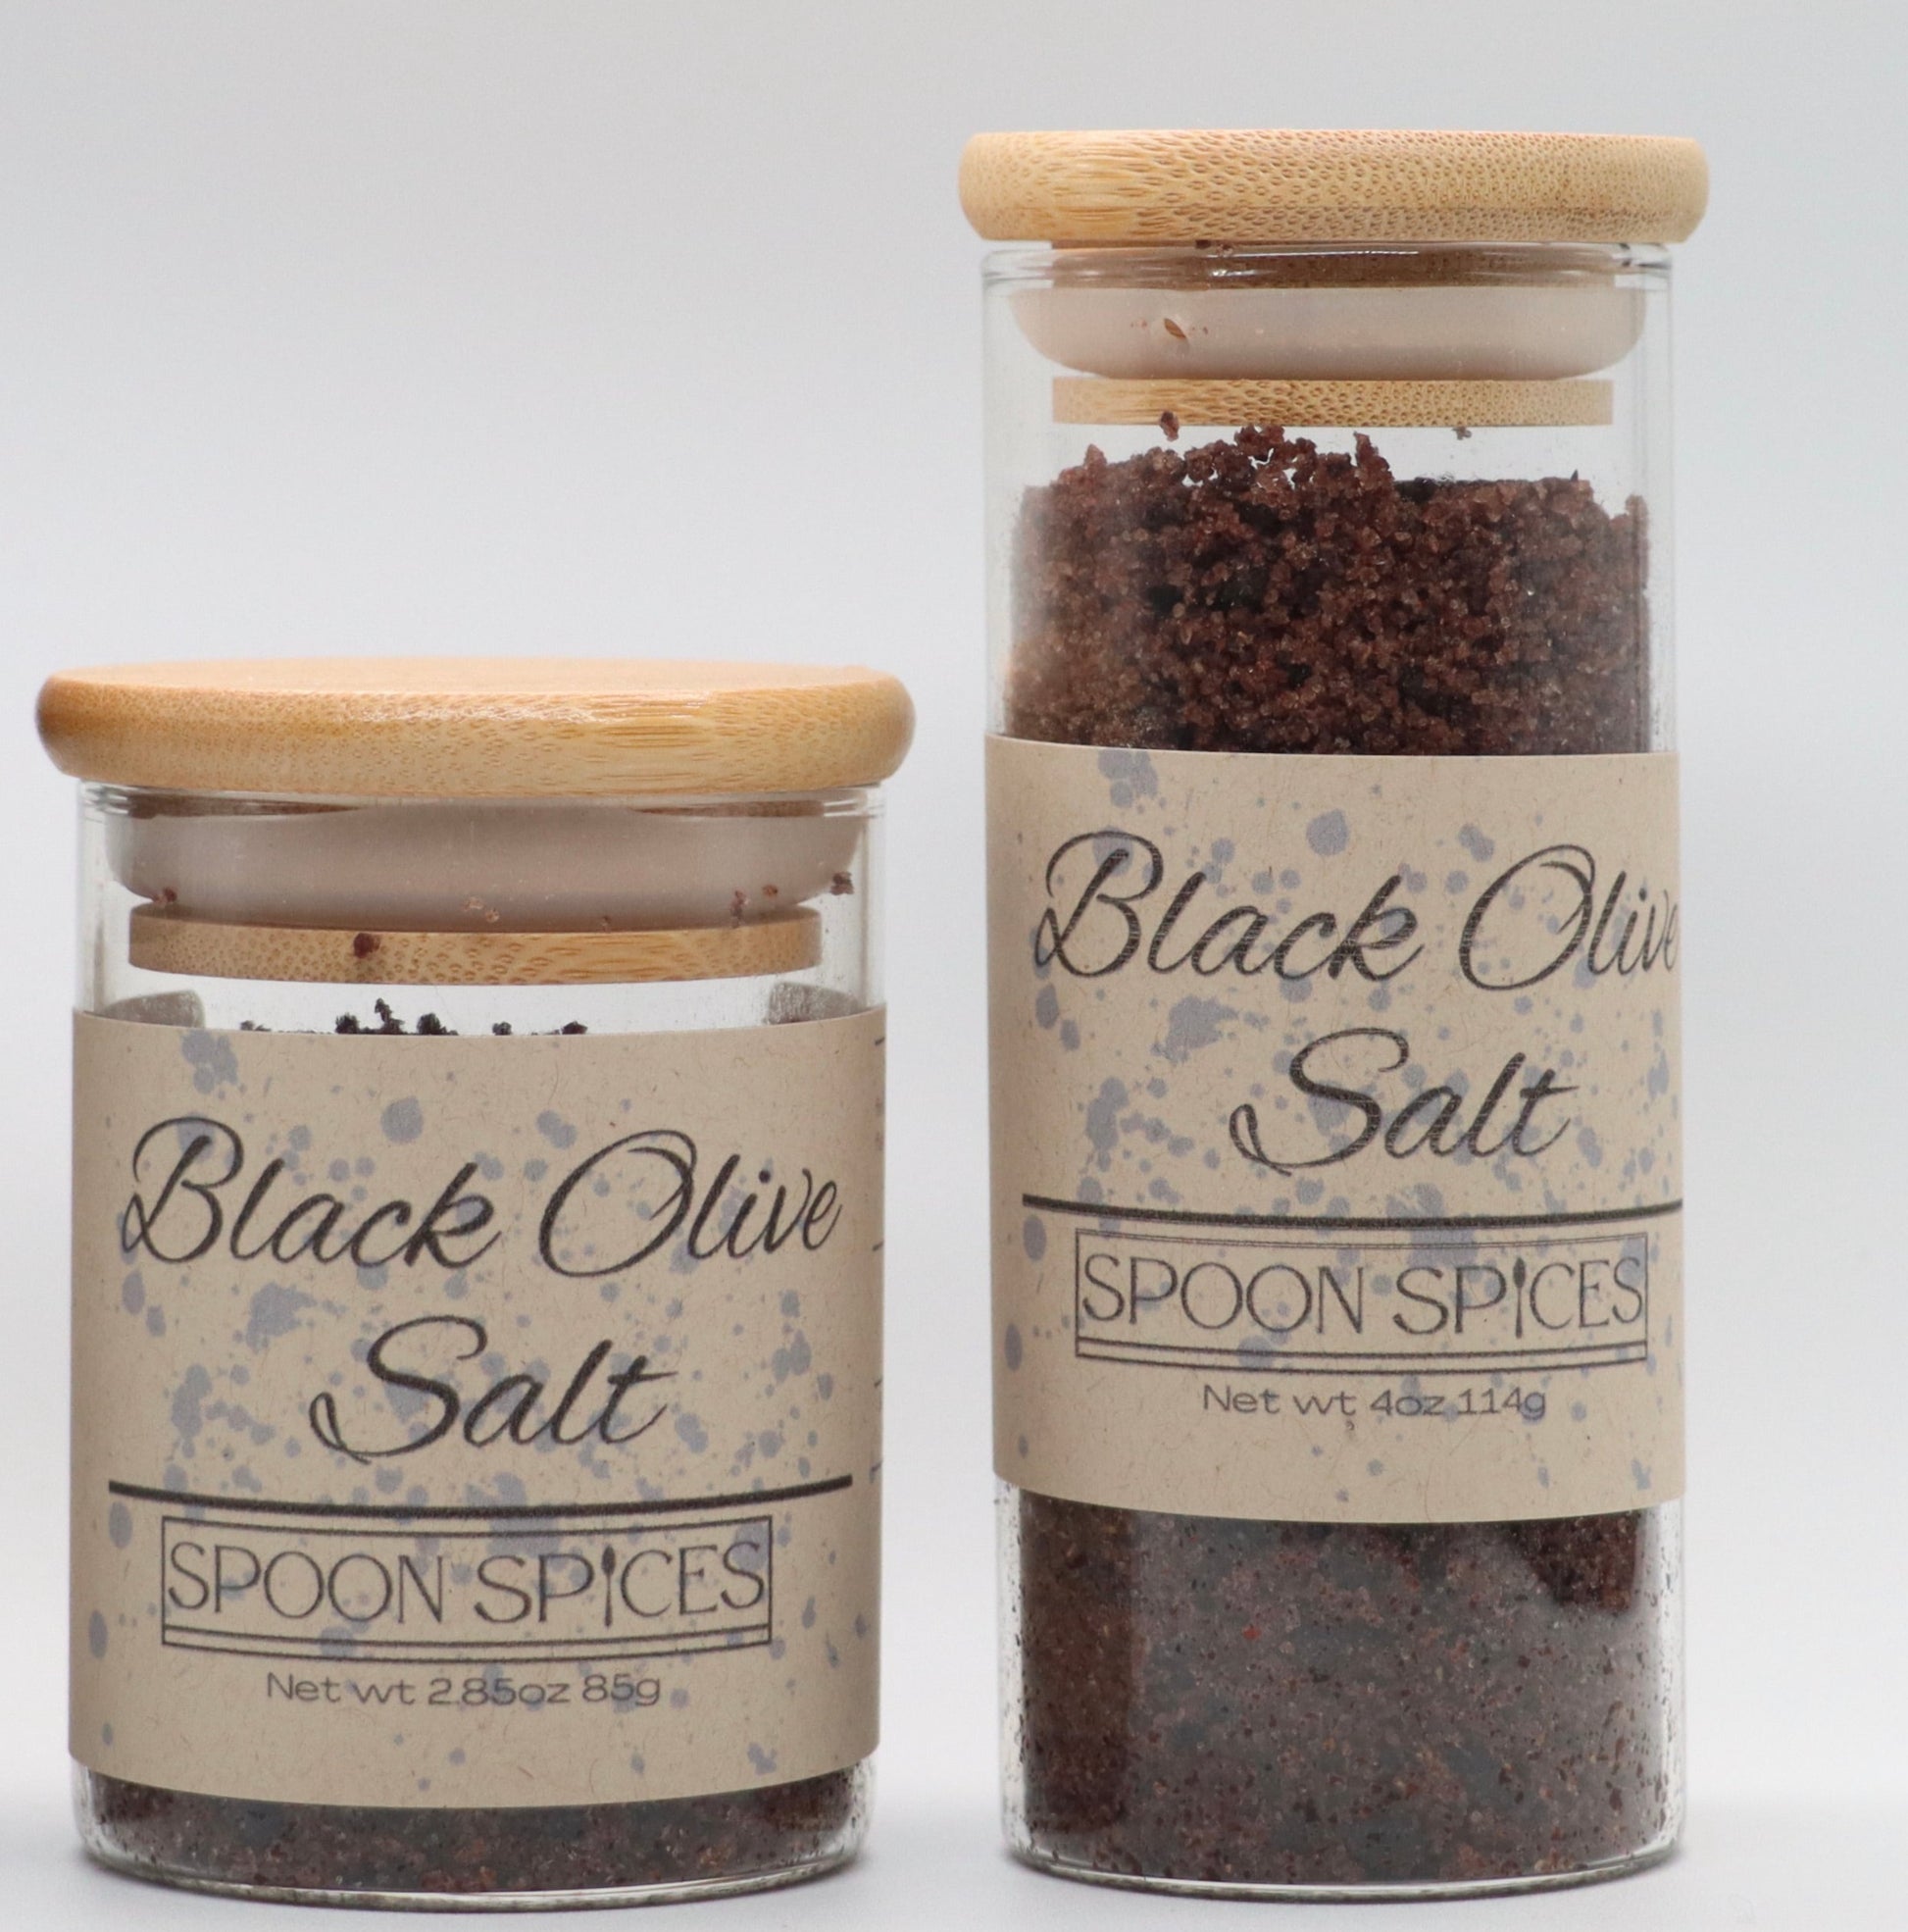 Black Olive Salt made with kalamata olives umami flavor spoon spices